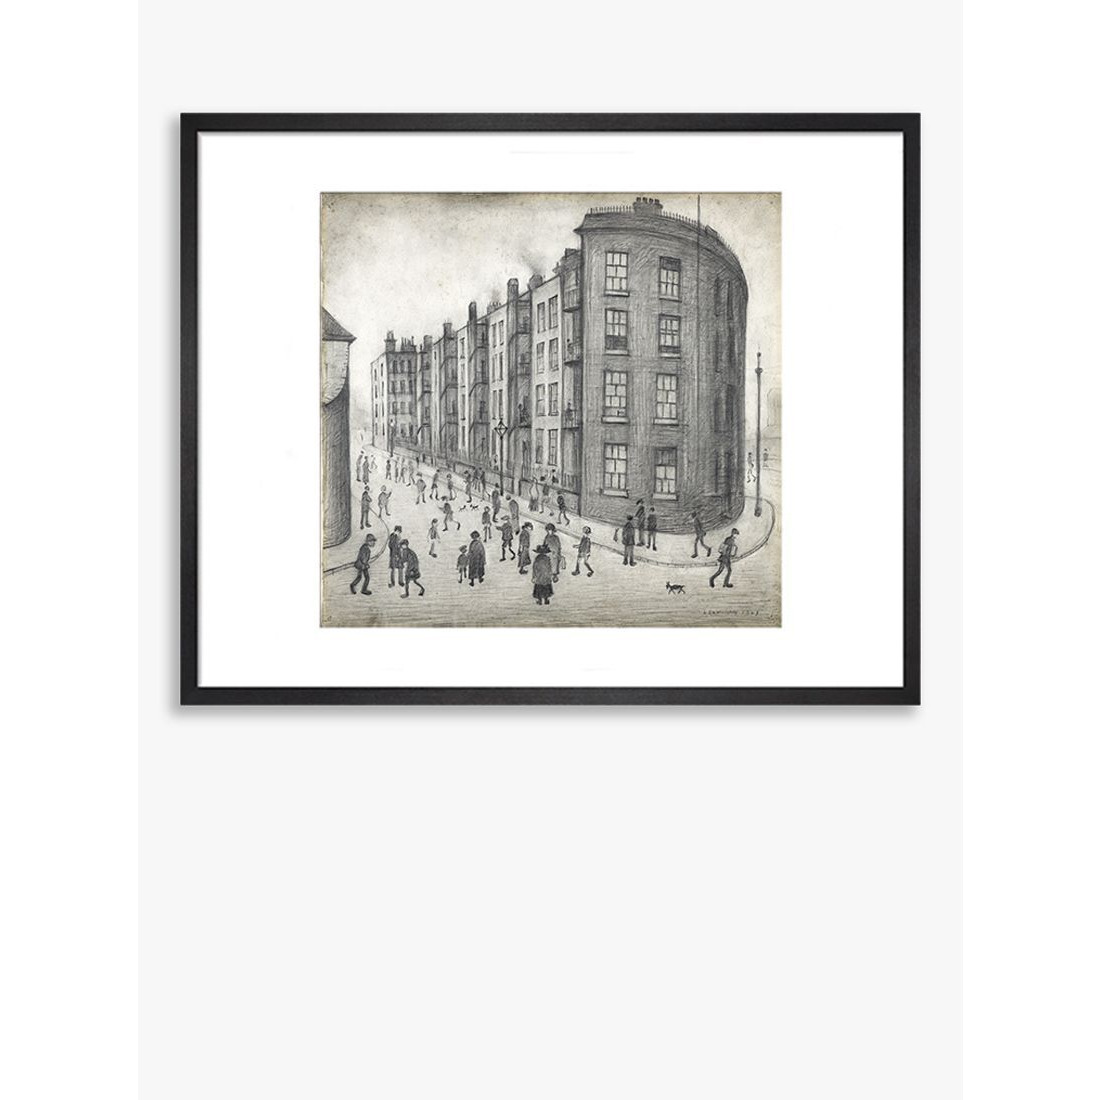 LS Lowry - 'Oldfield Road Dwellings, Salford' Framed Print & Mount, 42 x 52cm, Grey